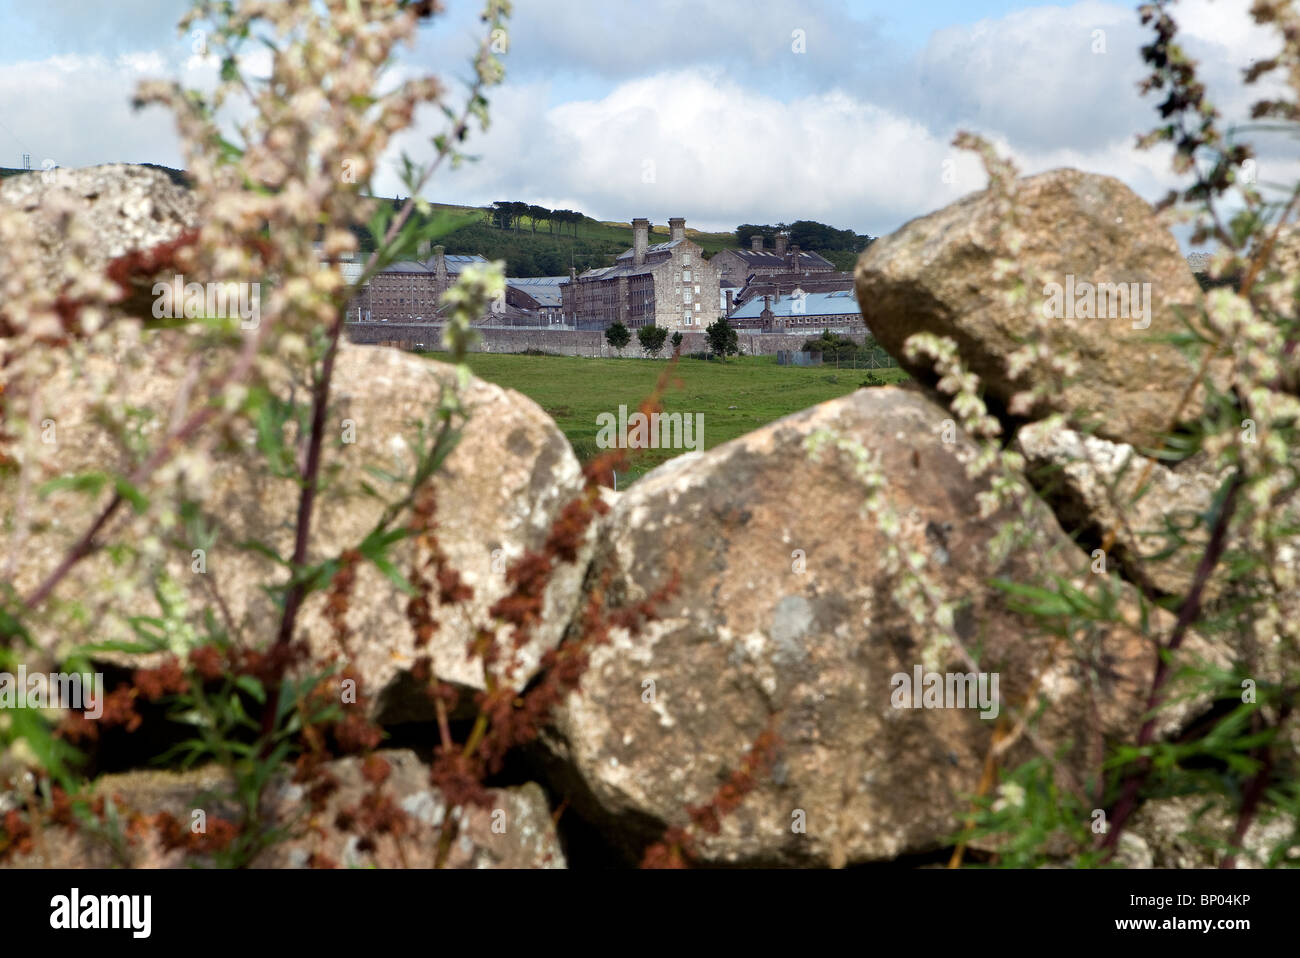 HM Prison de Dartmoor, Princetown, Devon, UK Banque D'Images